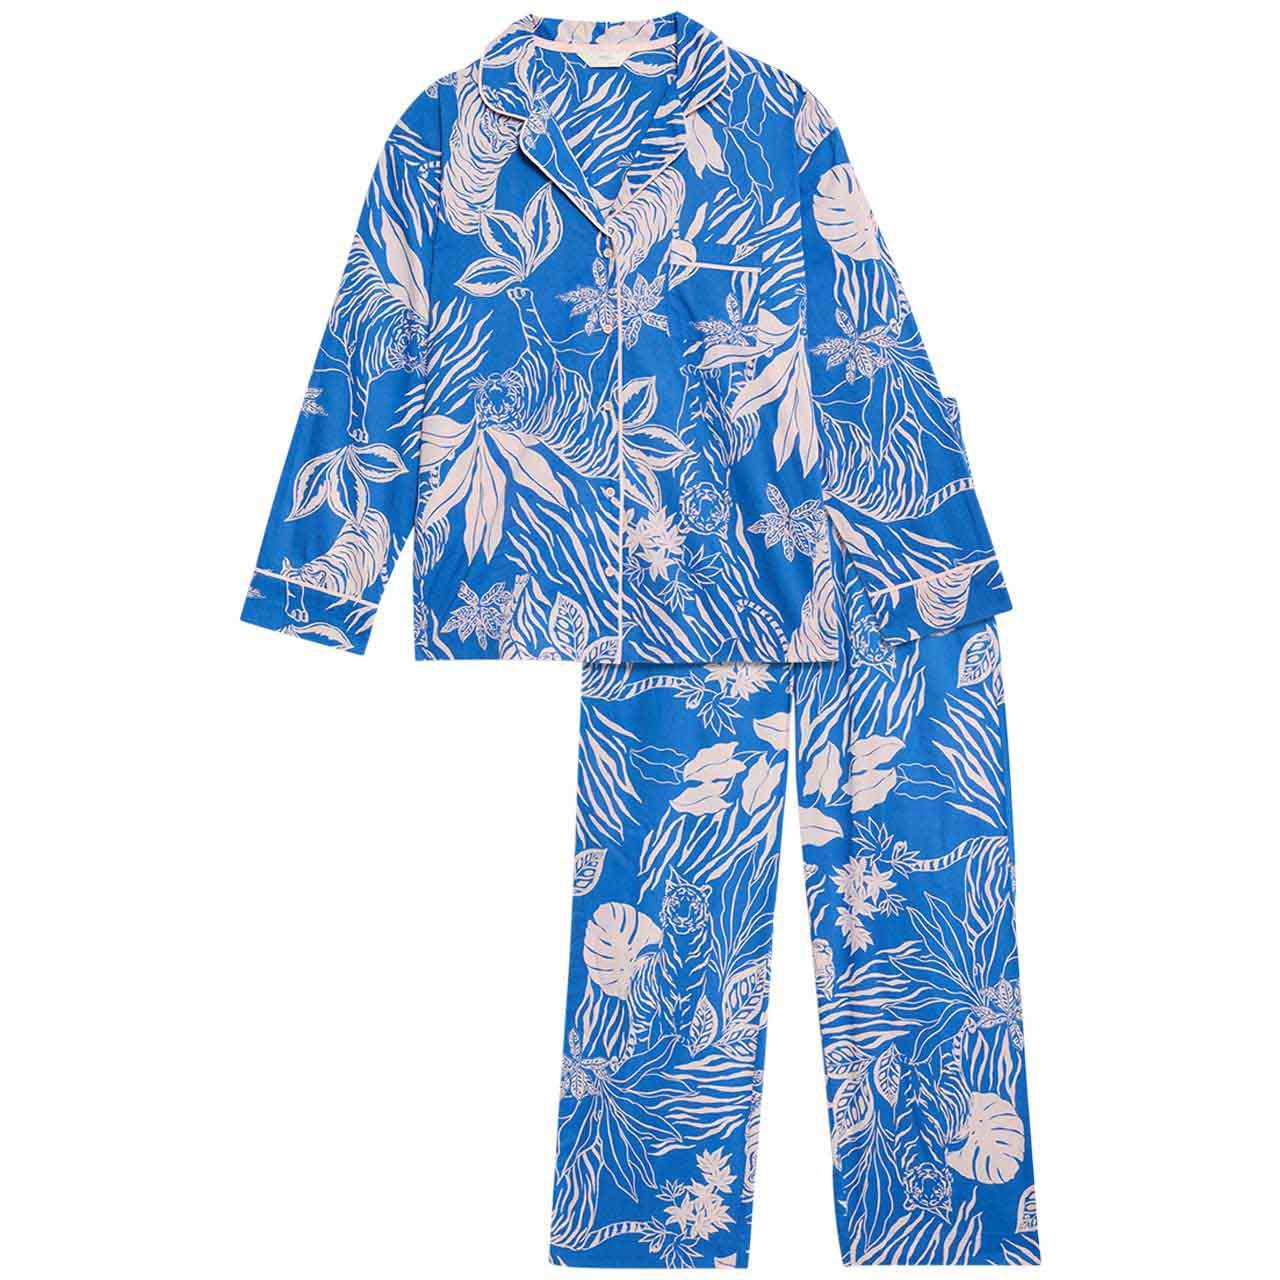 M&S Floral Cambric Revere PJ, 14, Bright Blue